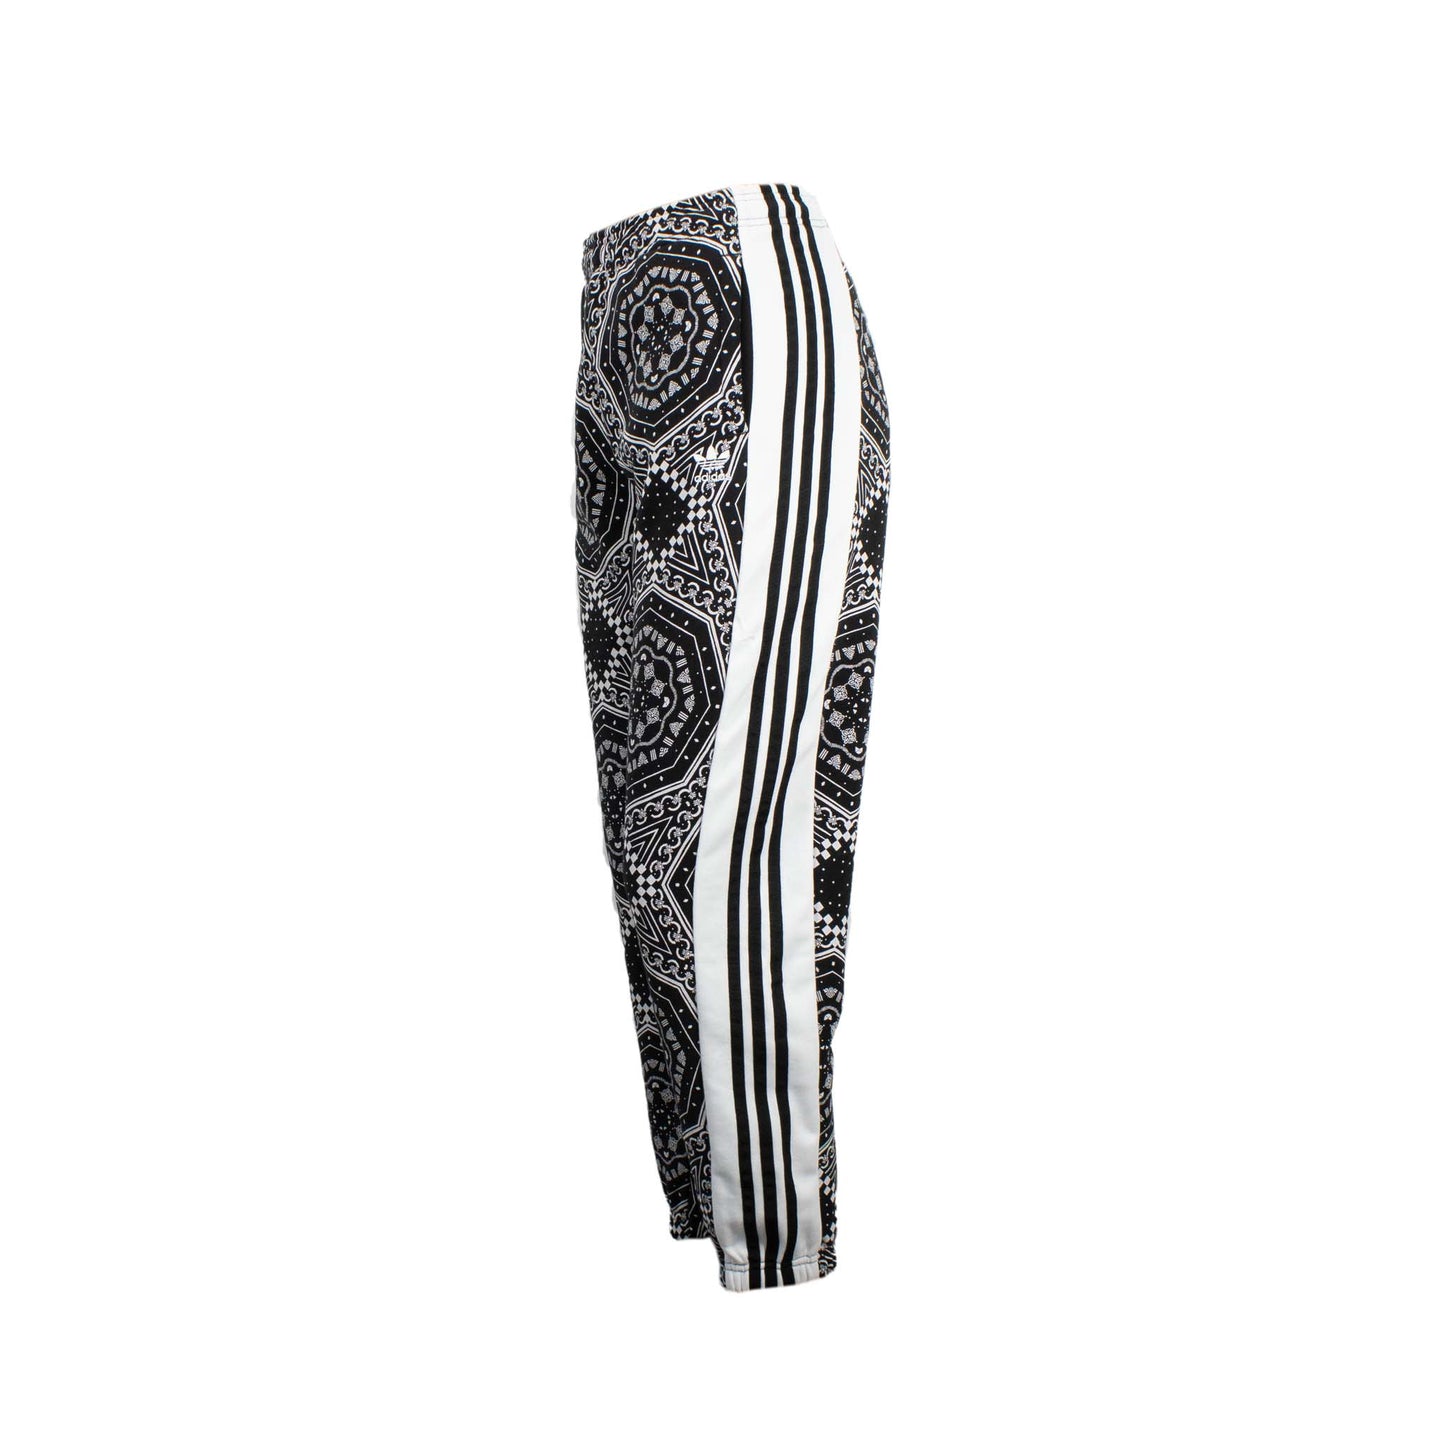 Adidas Originals Cuffed Pants Damen Hose Sporthose Paisley Schwarz DX1157 Gr. 30